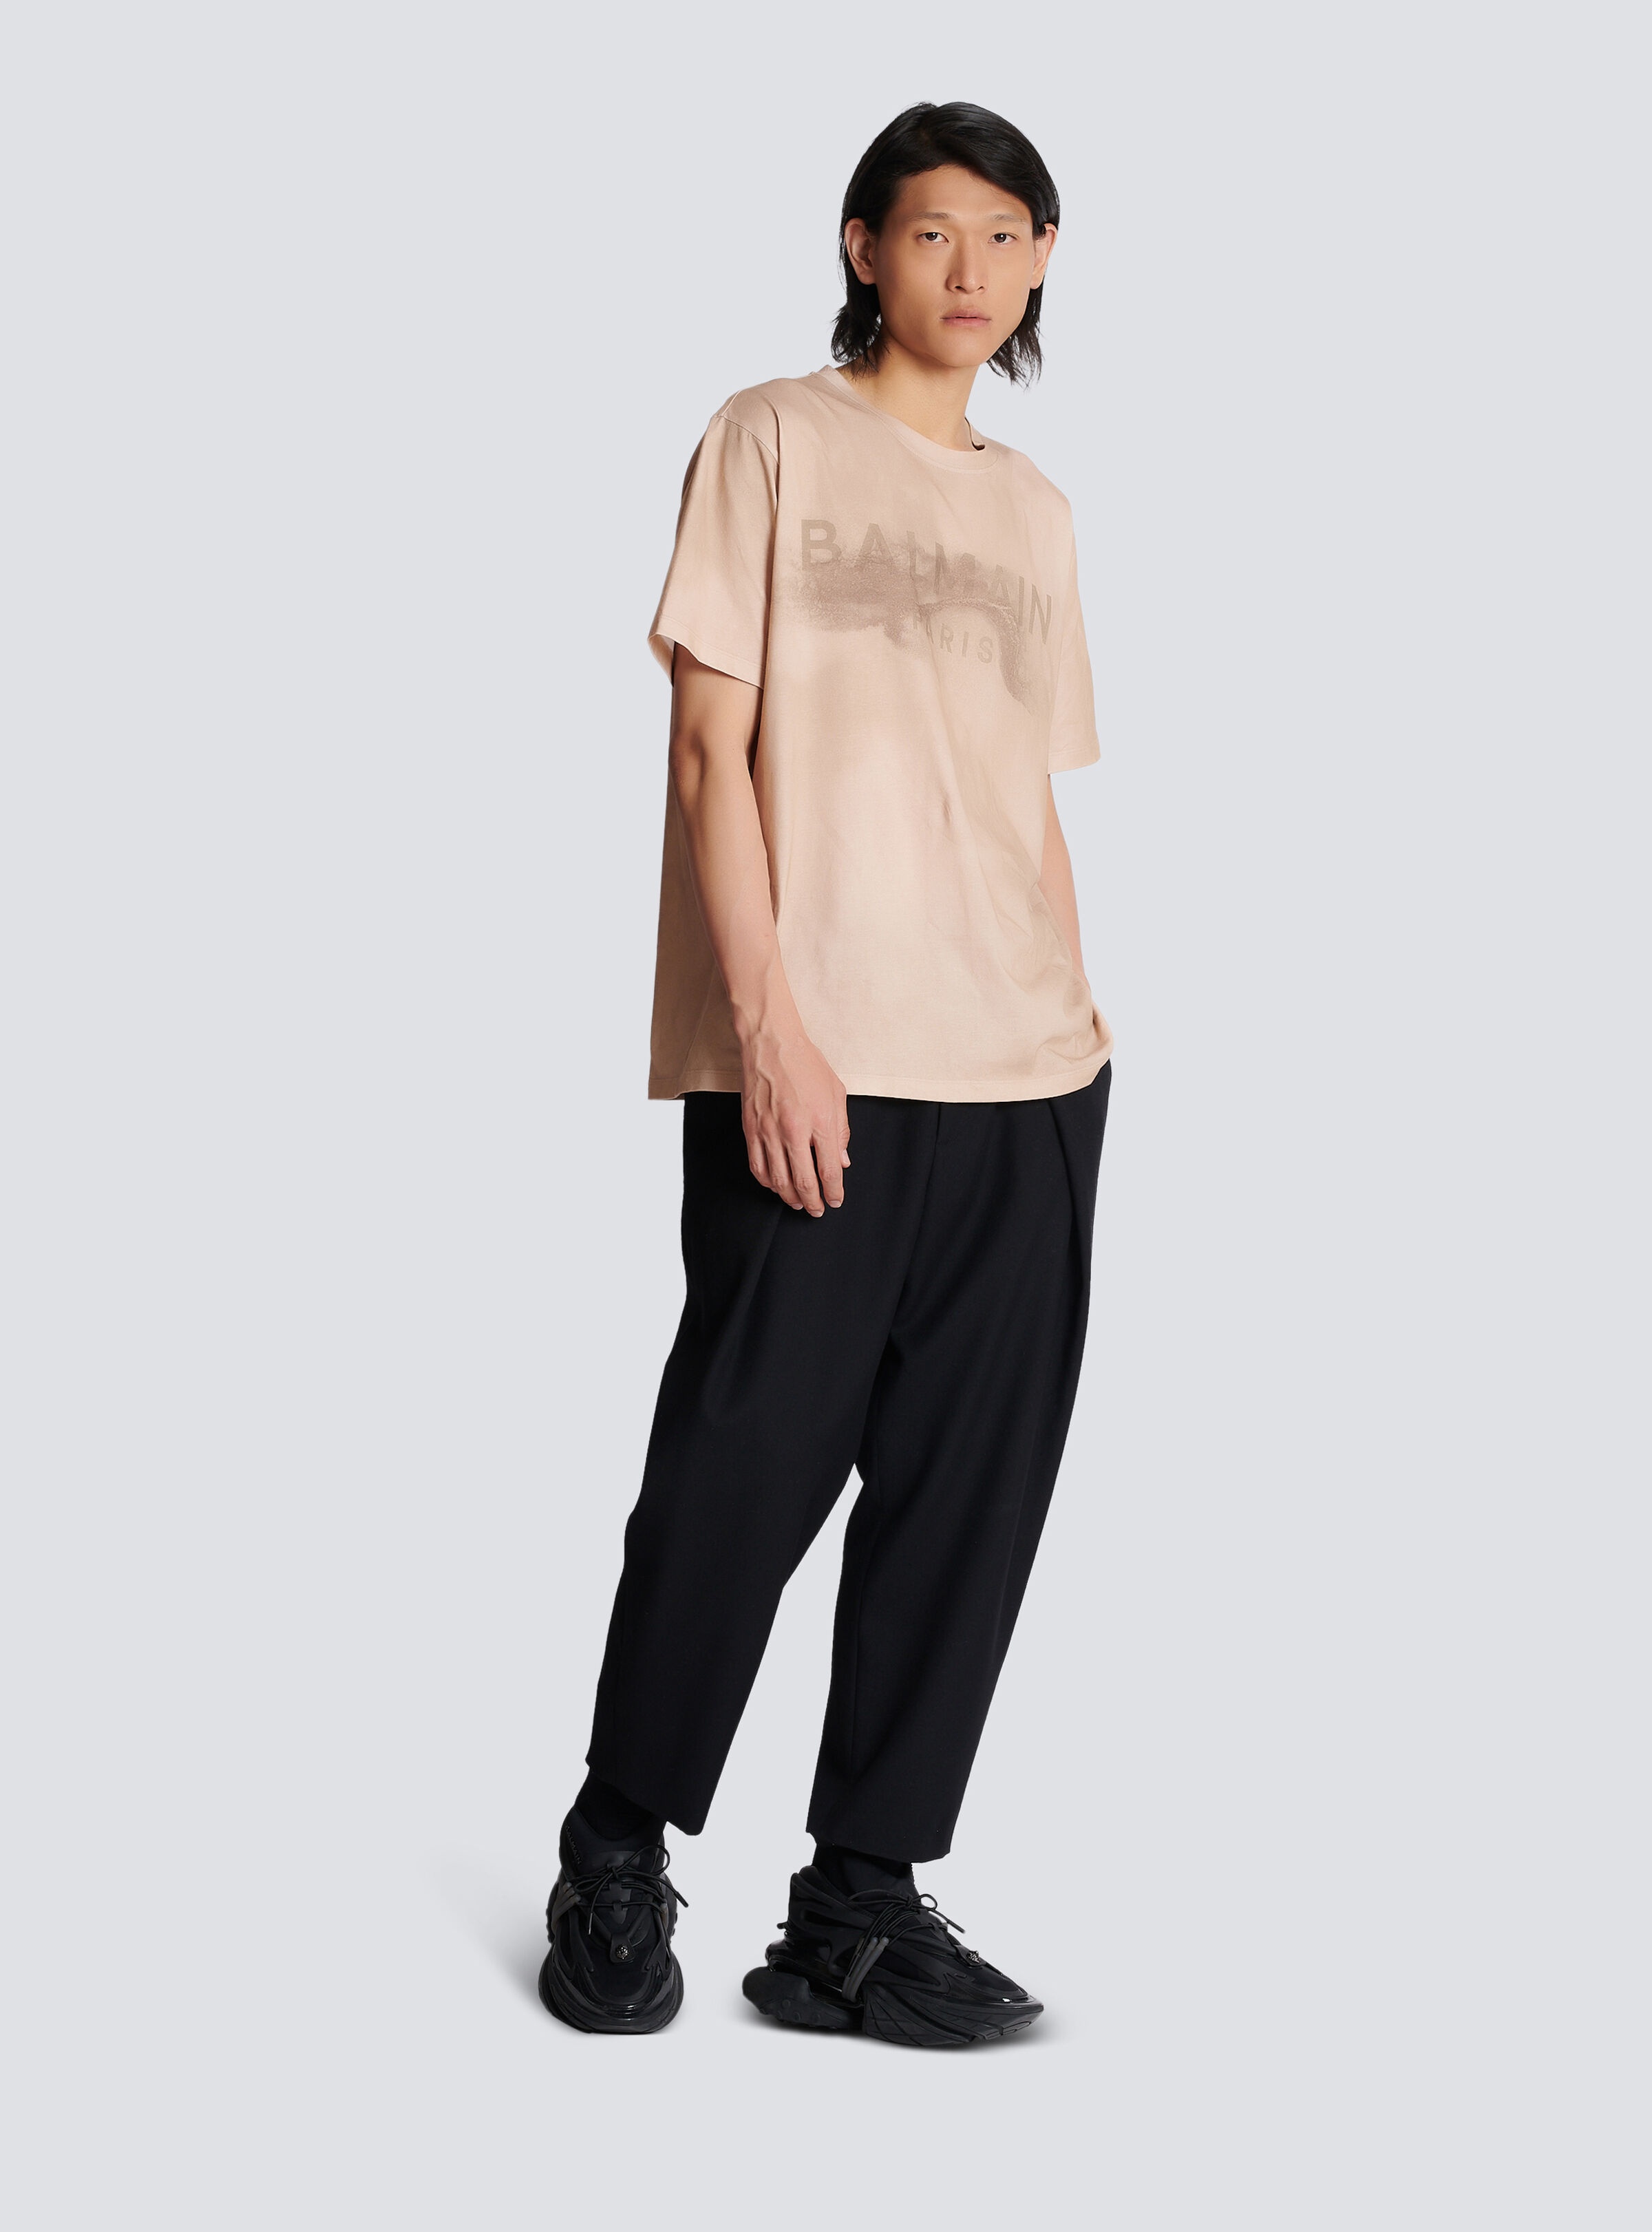 T-shirt in eco-responsible cotton with Balmain Paris desert logo - 3